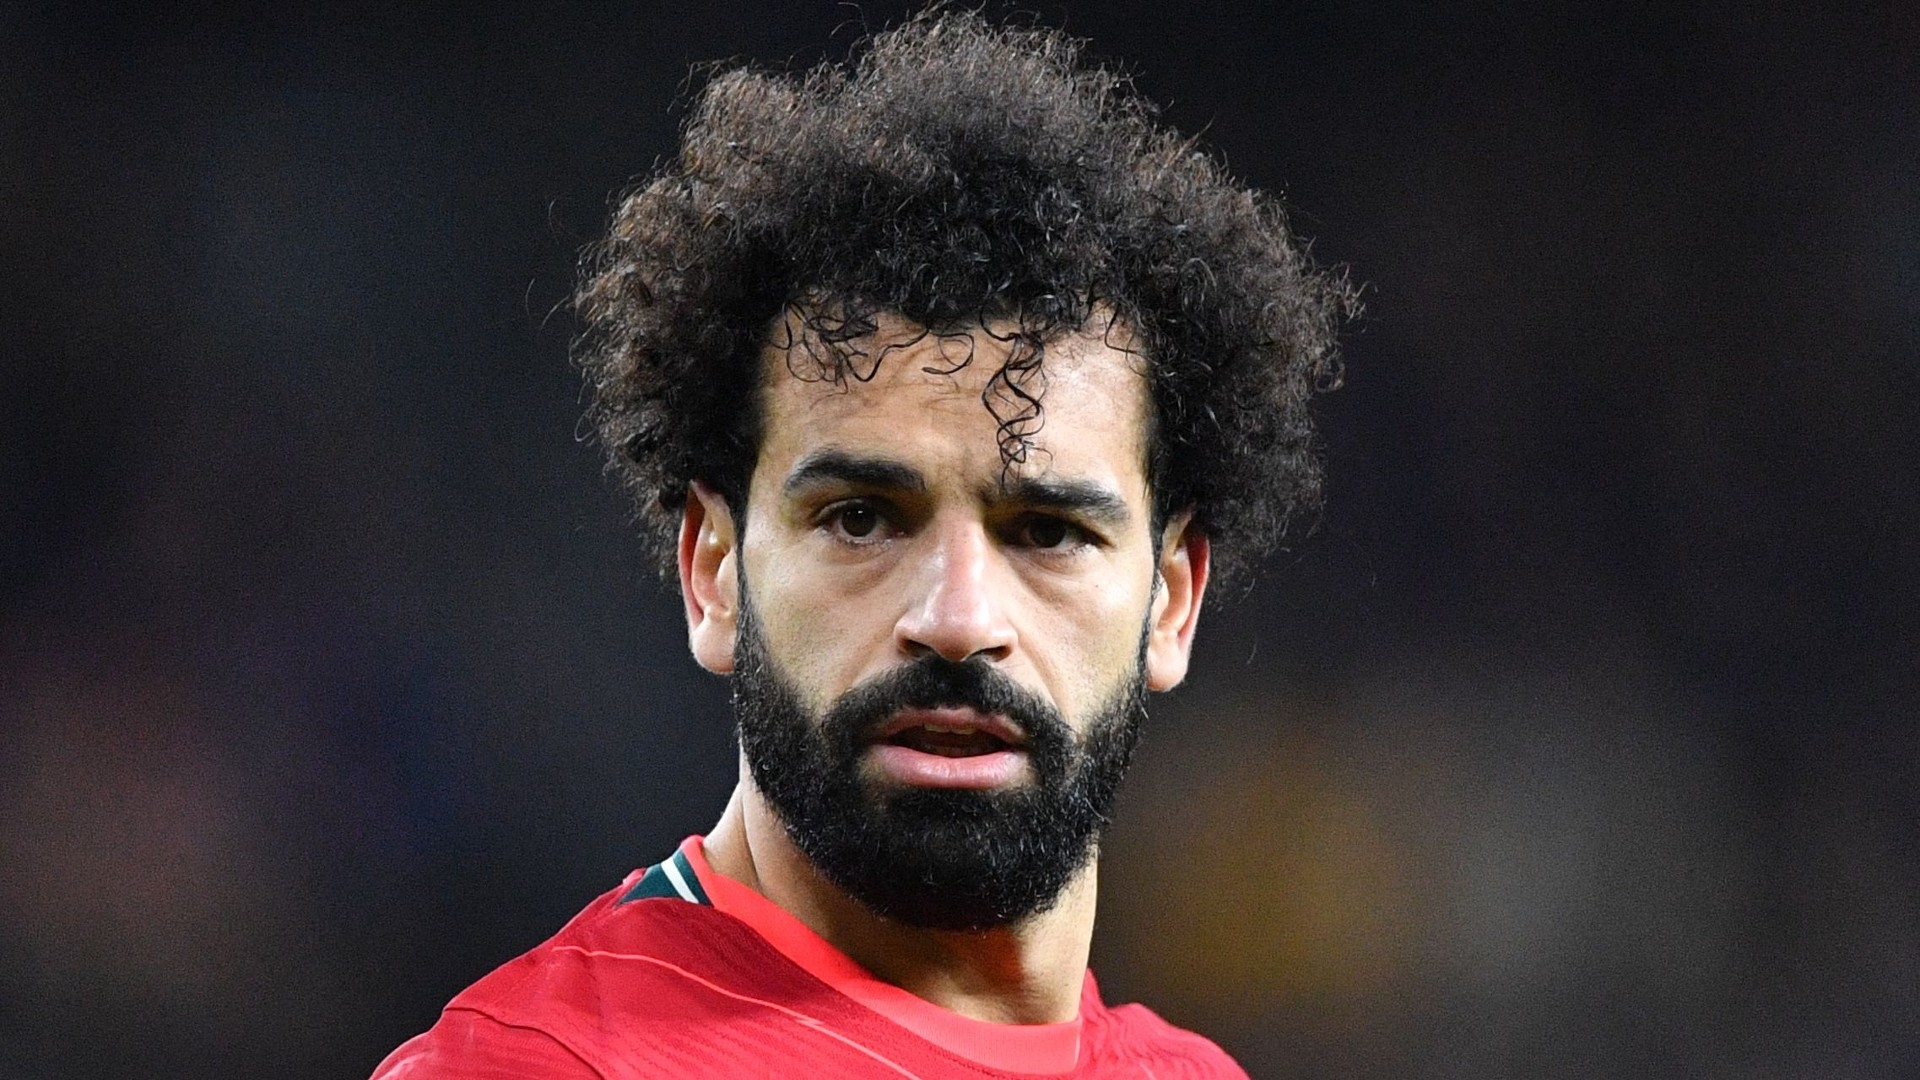 Mohamed Salah jure fidélité à Liverpool.